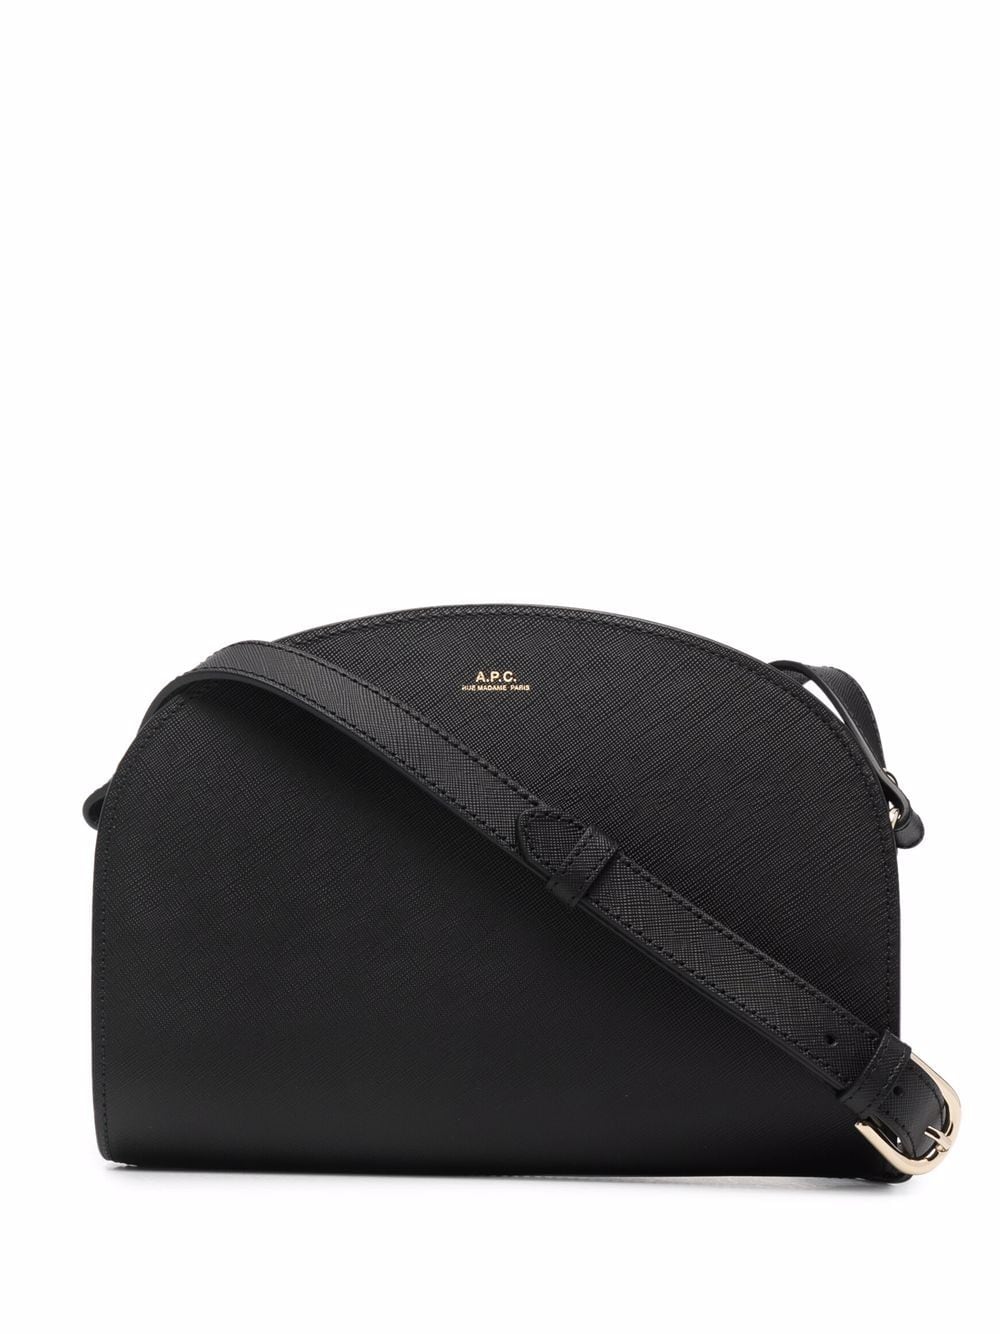 A.P.C. Demi Lune leather bag - Black von A.P.C.